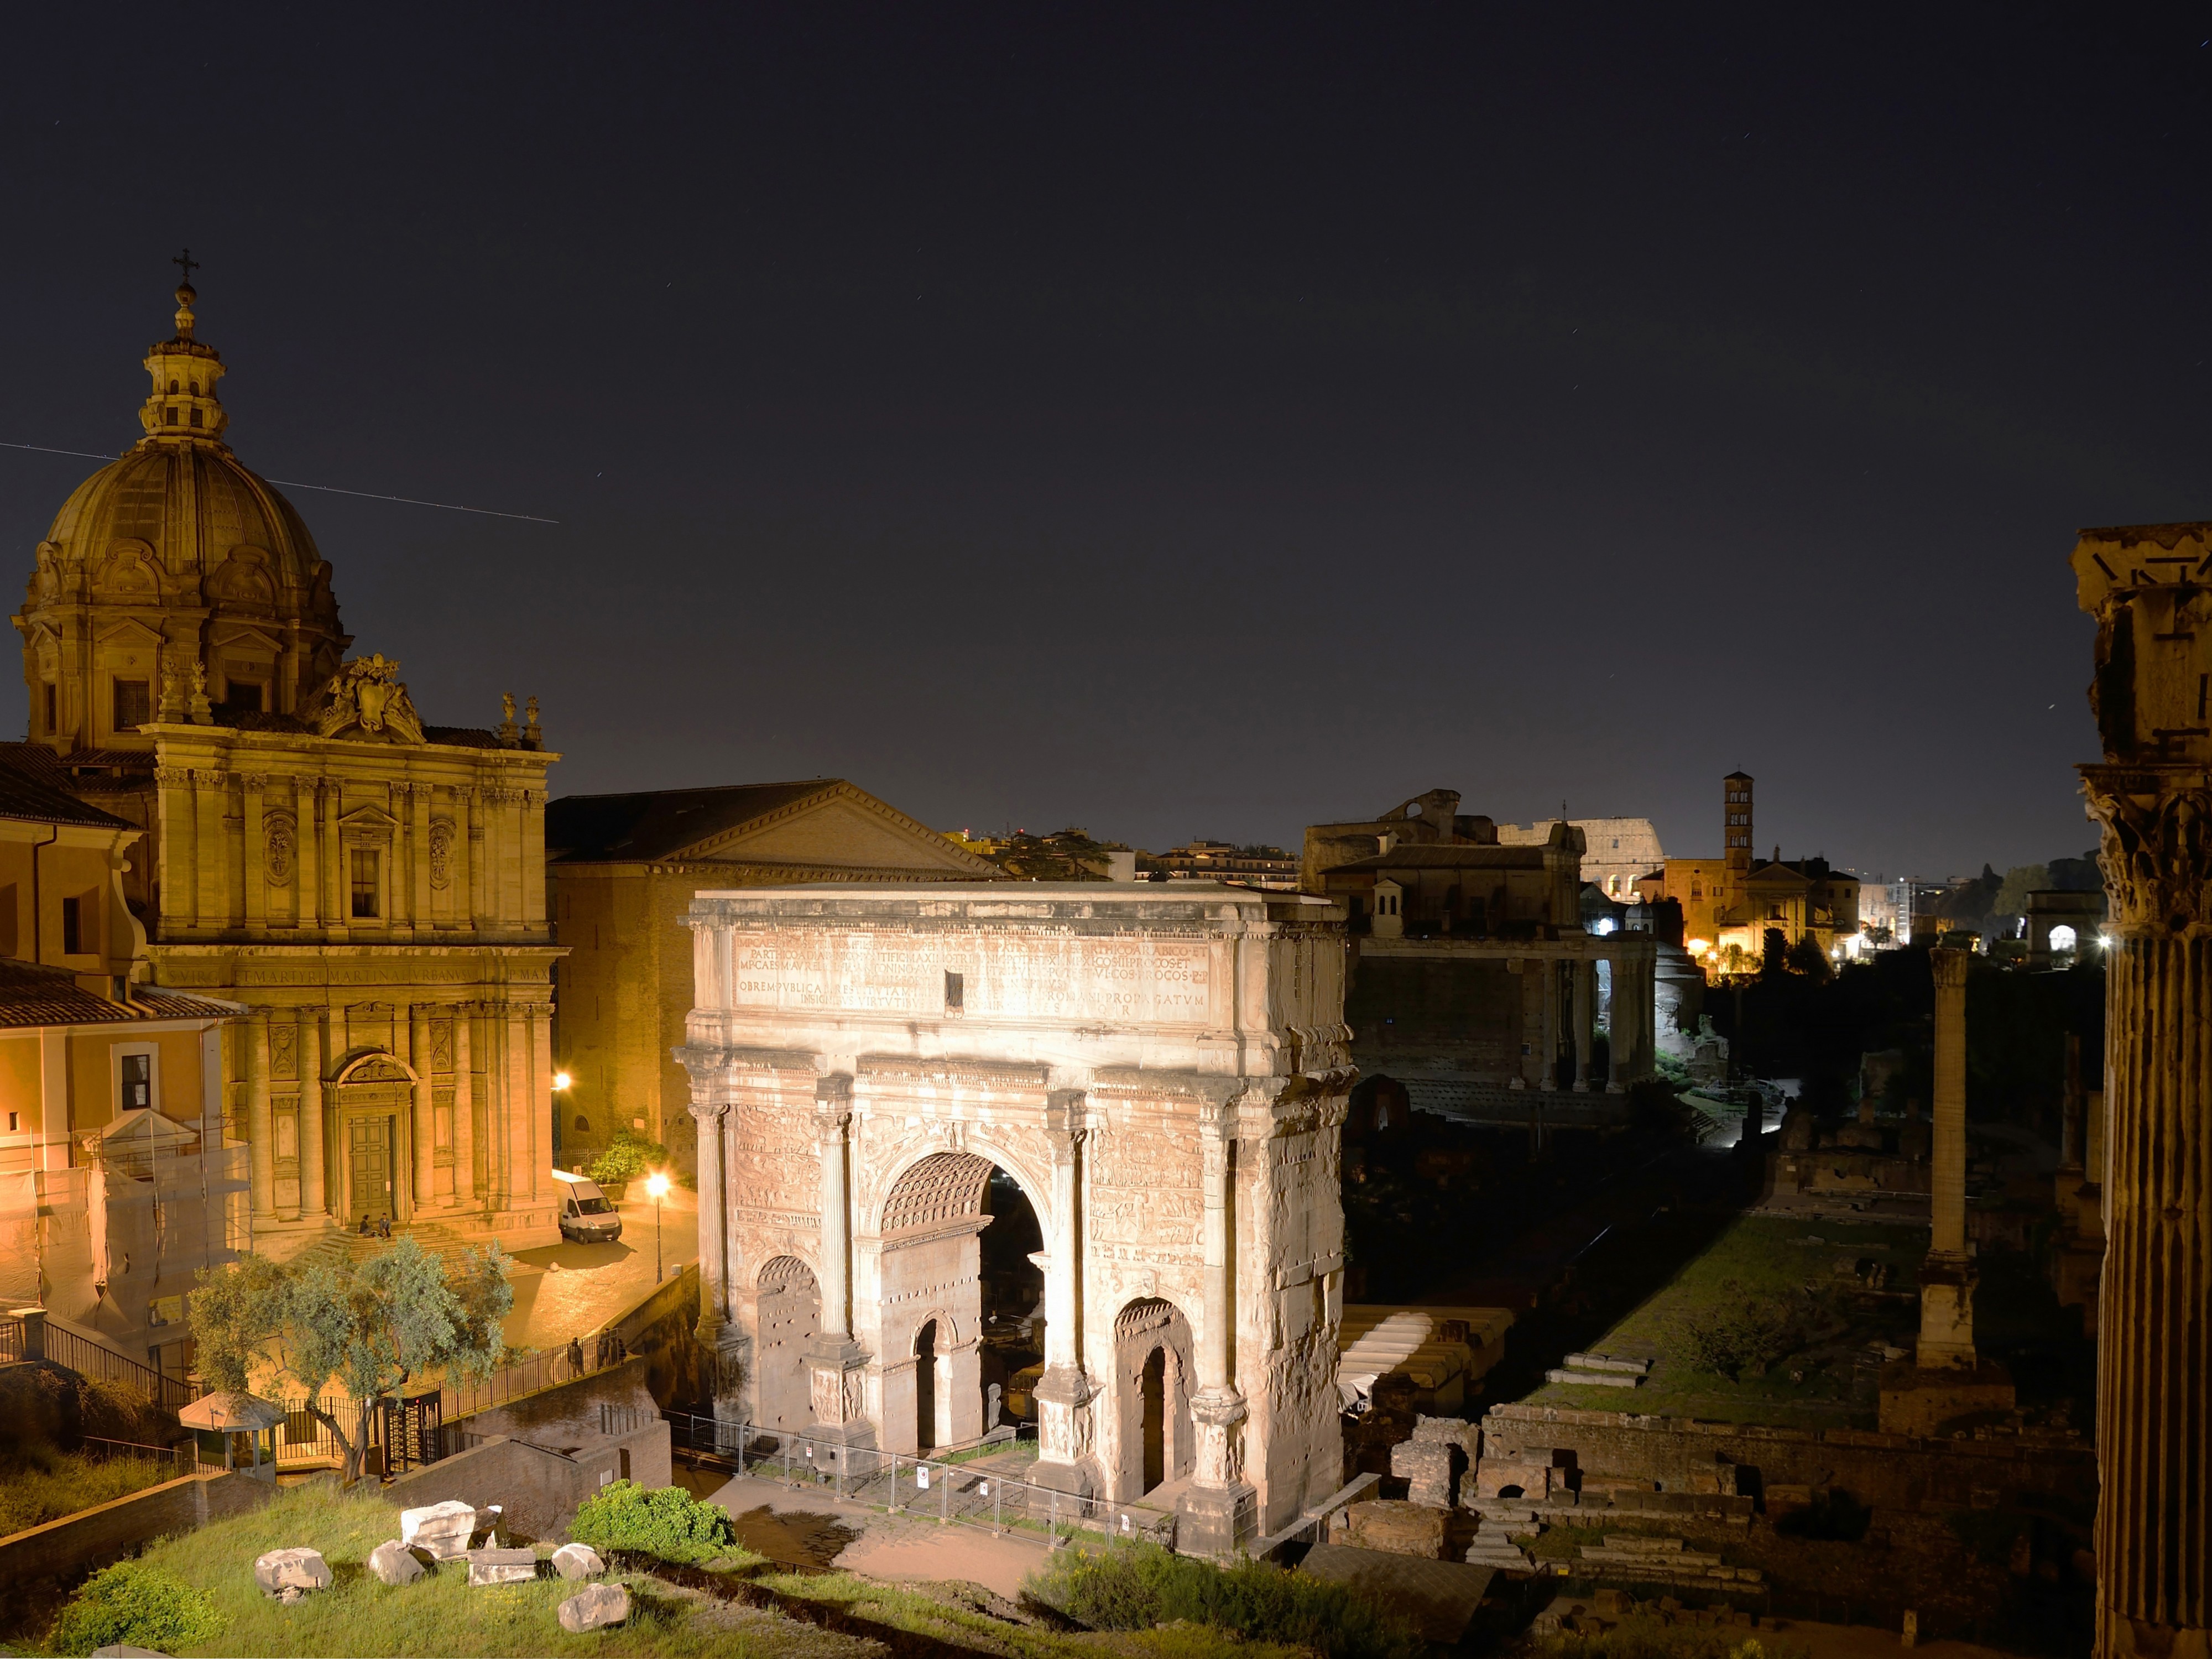 Arch of Septimius Severus (Rome) in the night